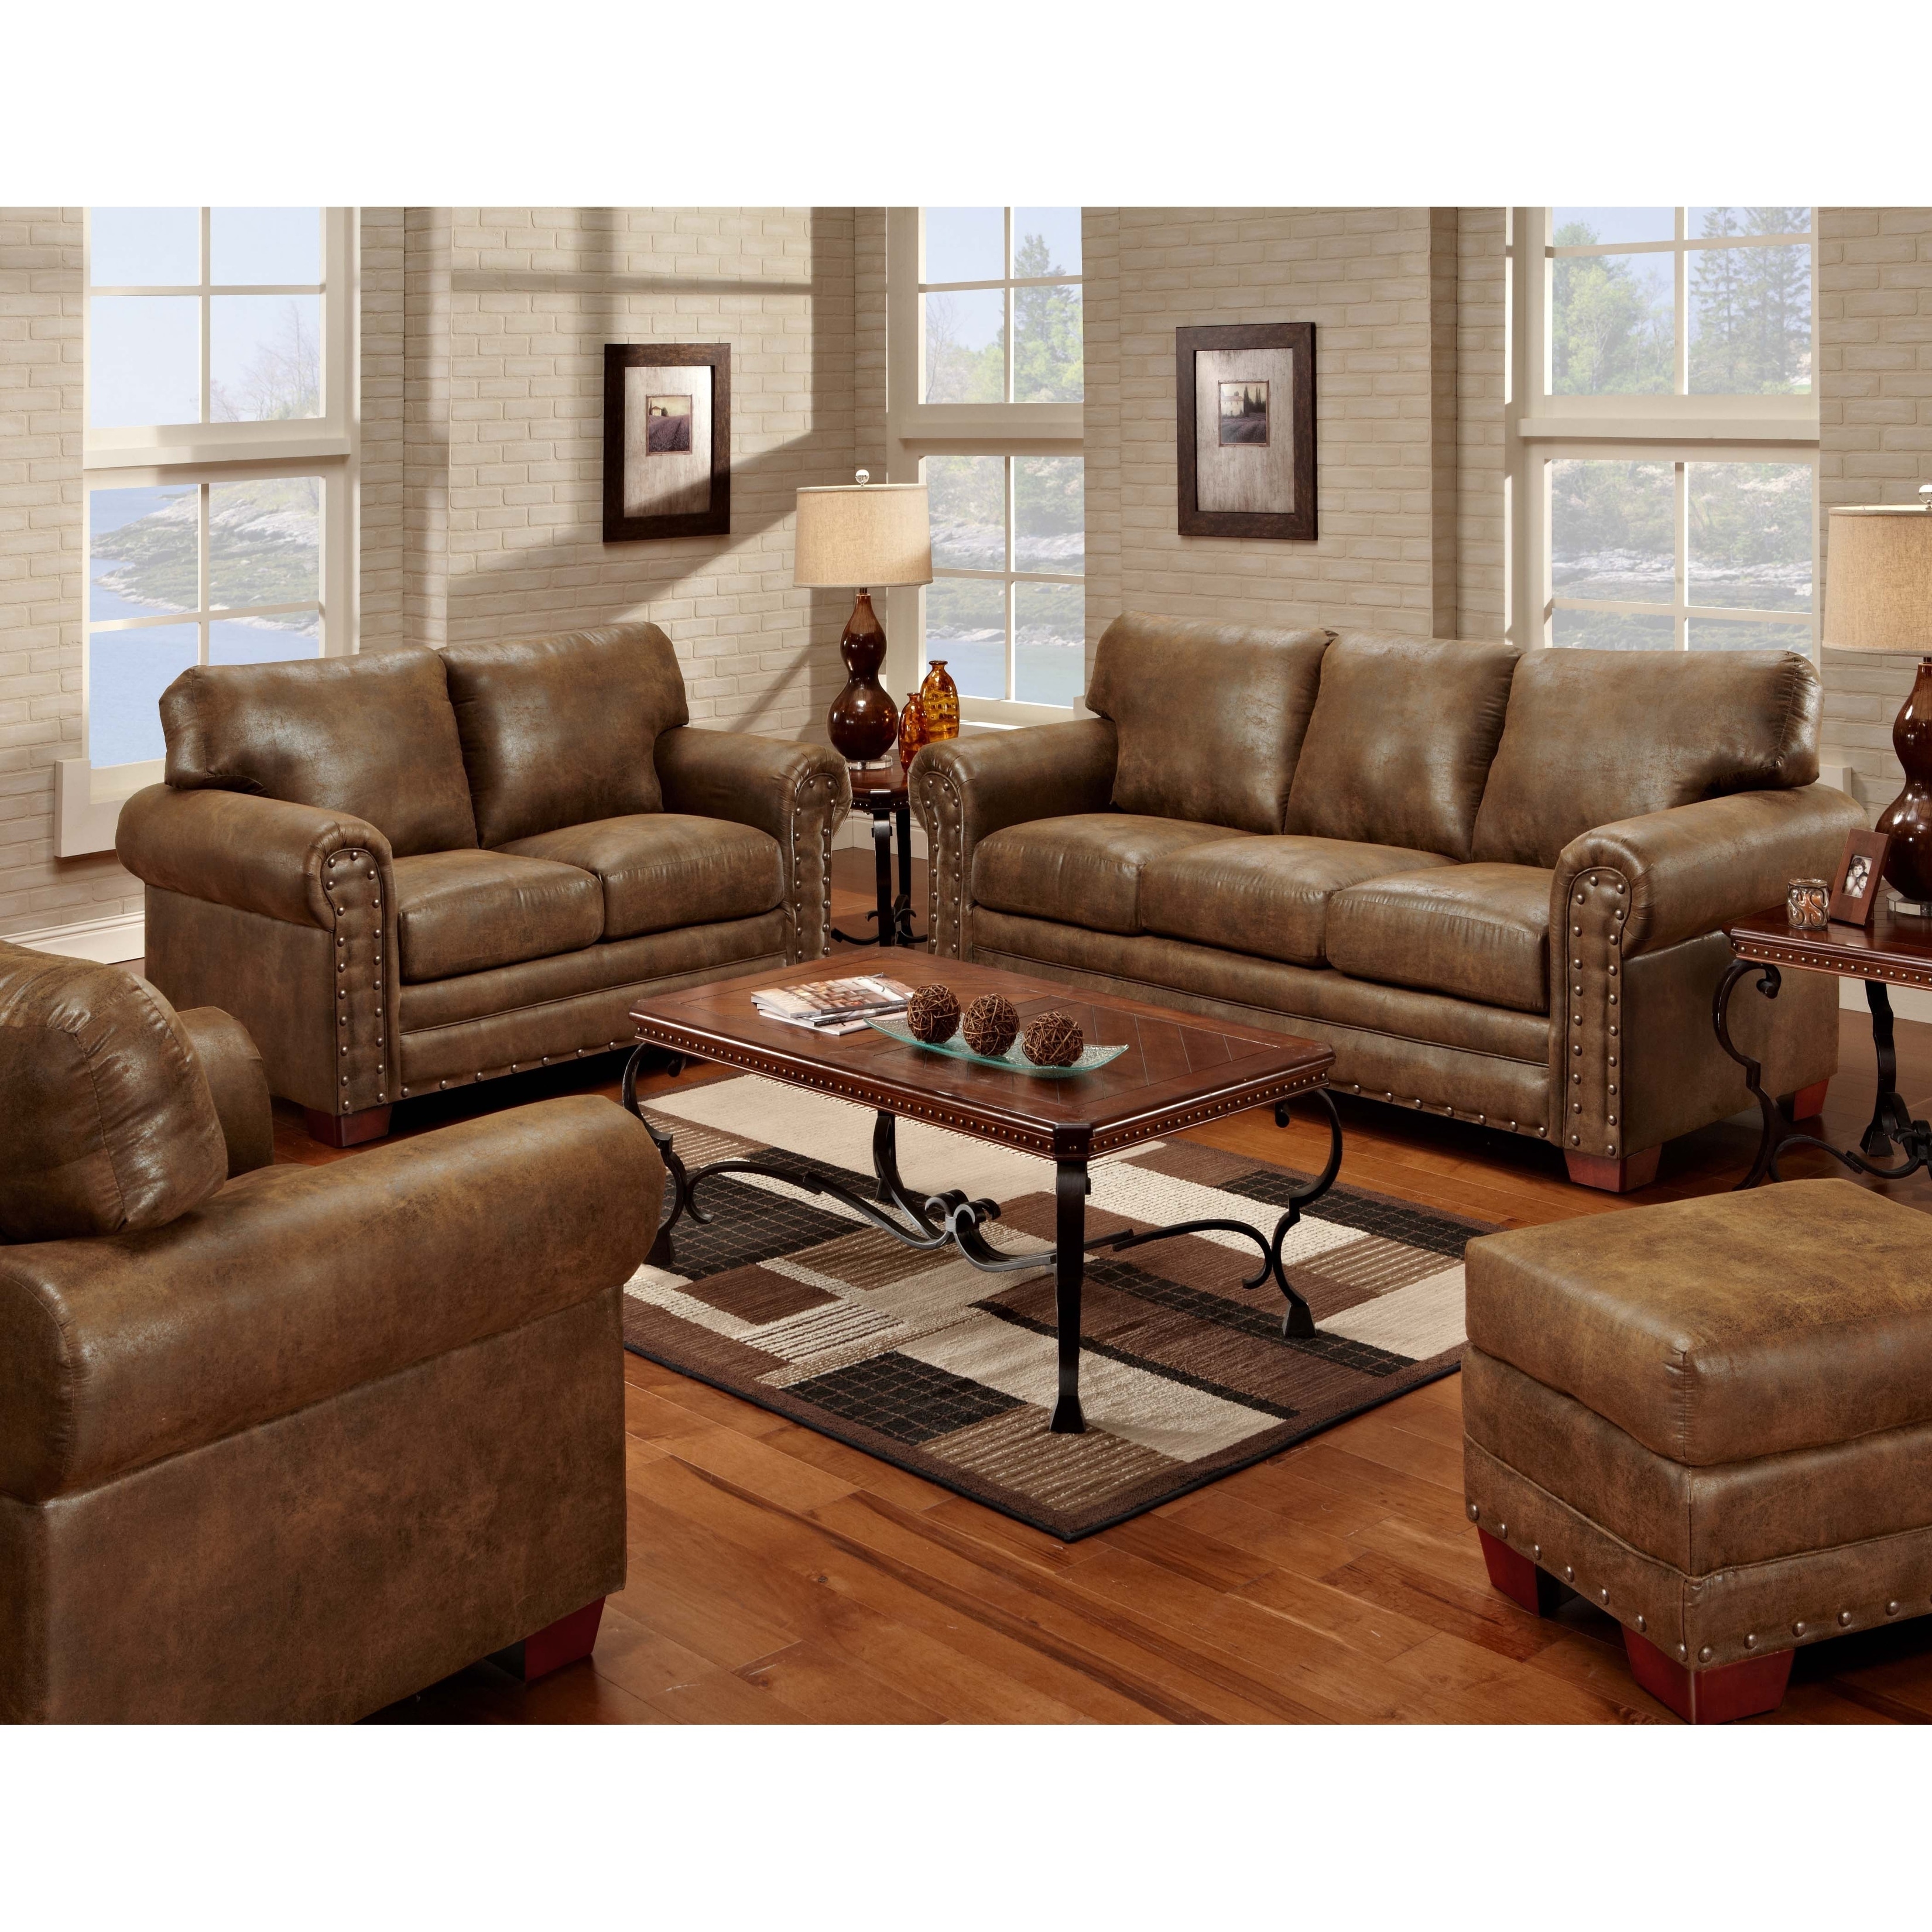 American Furniture Classics Model 8500 20K Buckskin 4 Piece Set Overstock 27366451